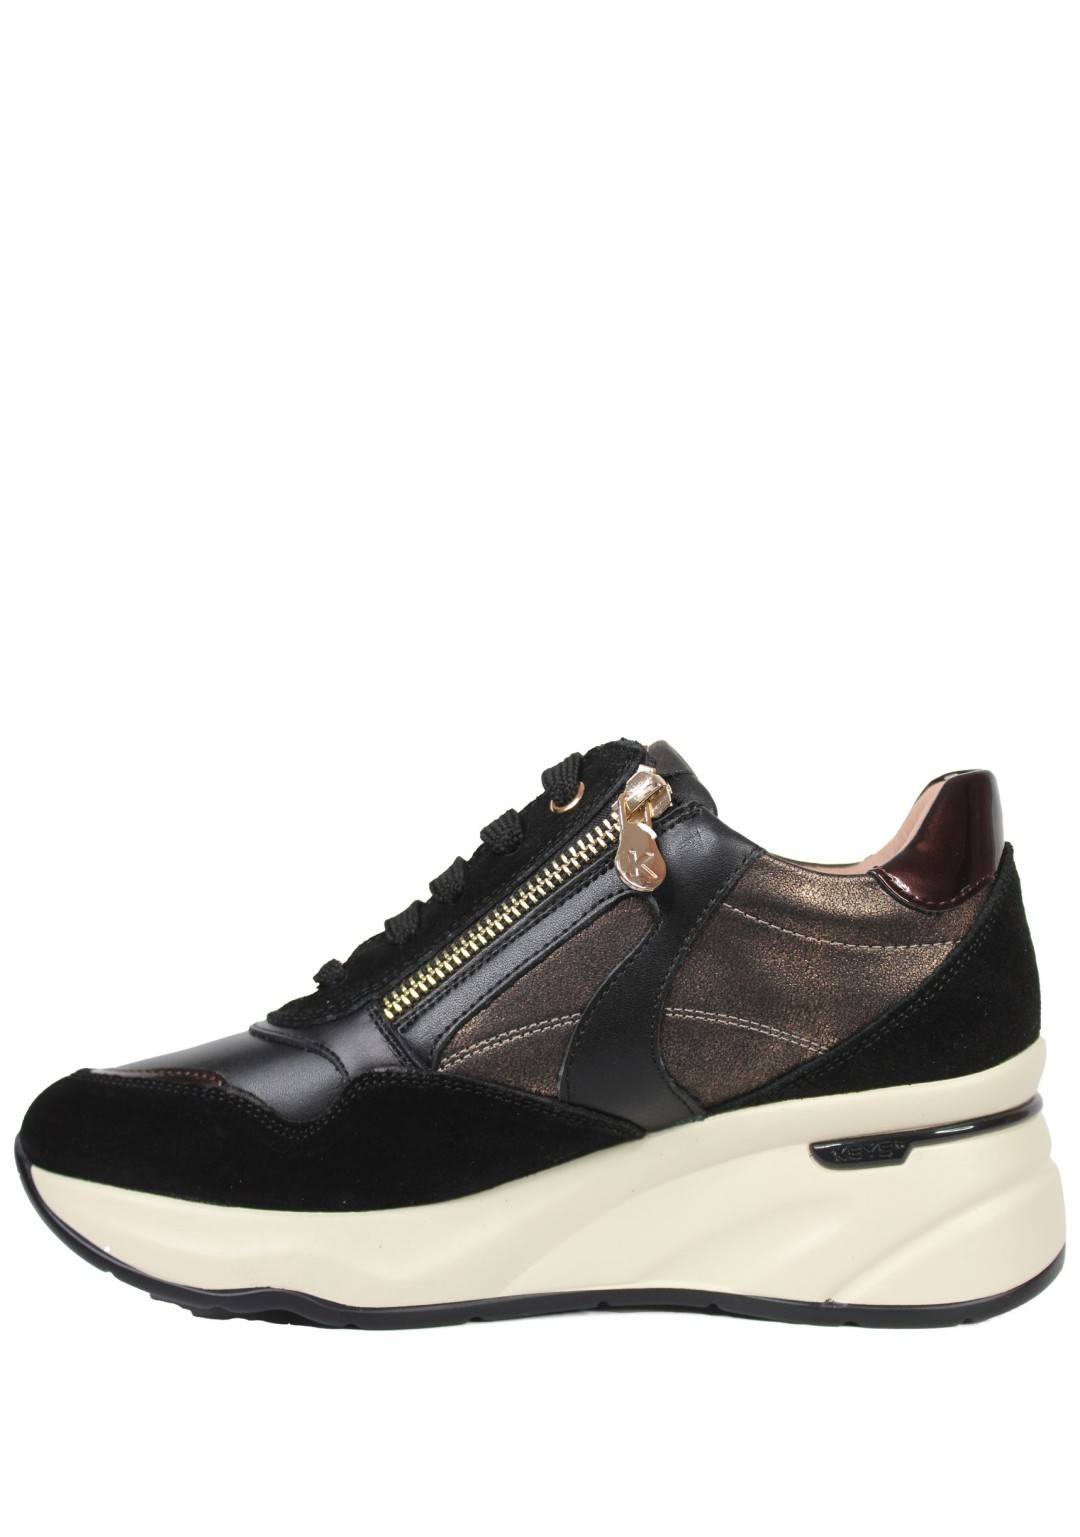 KEYS - Sneaker F.Alto - Donna - K-8400